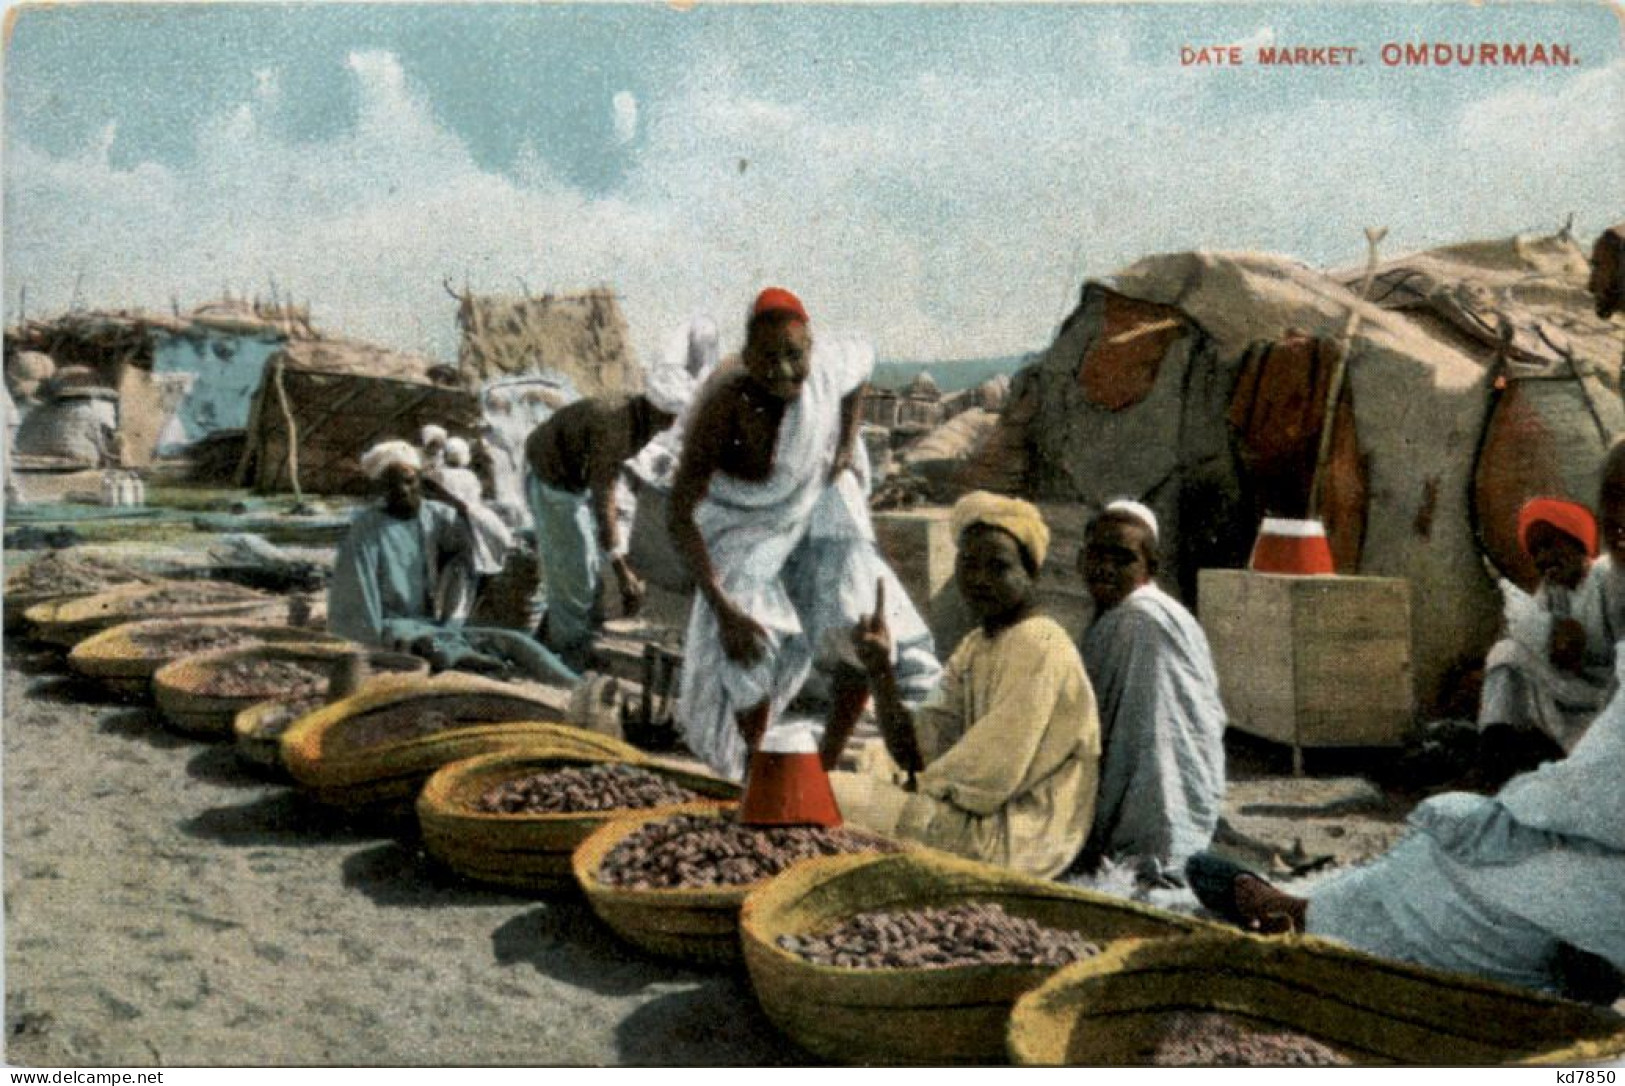 Sudan - 'Omdurman - Date Market - Sudan